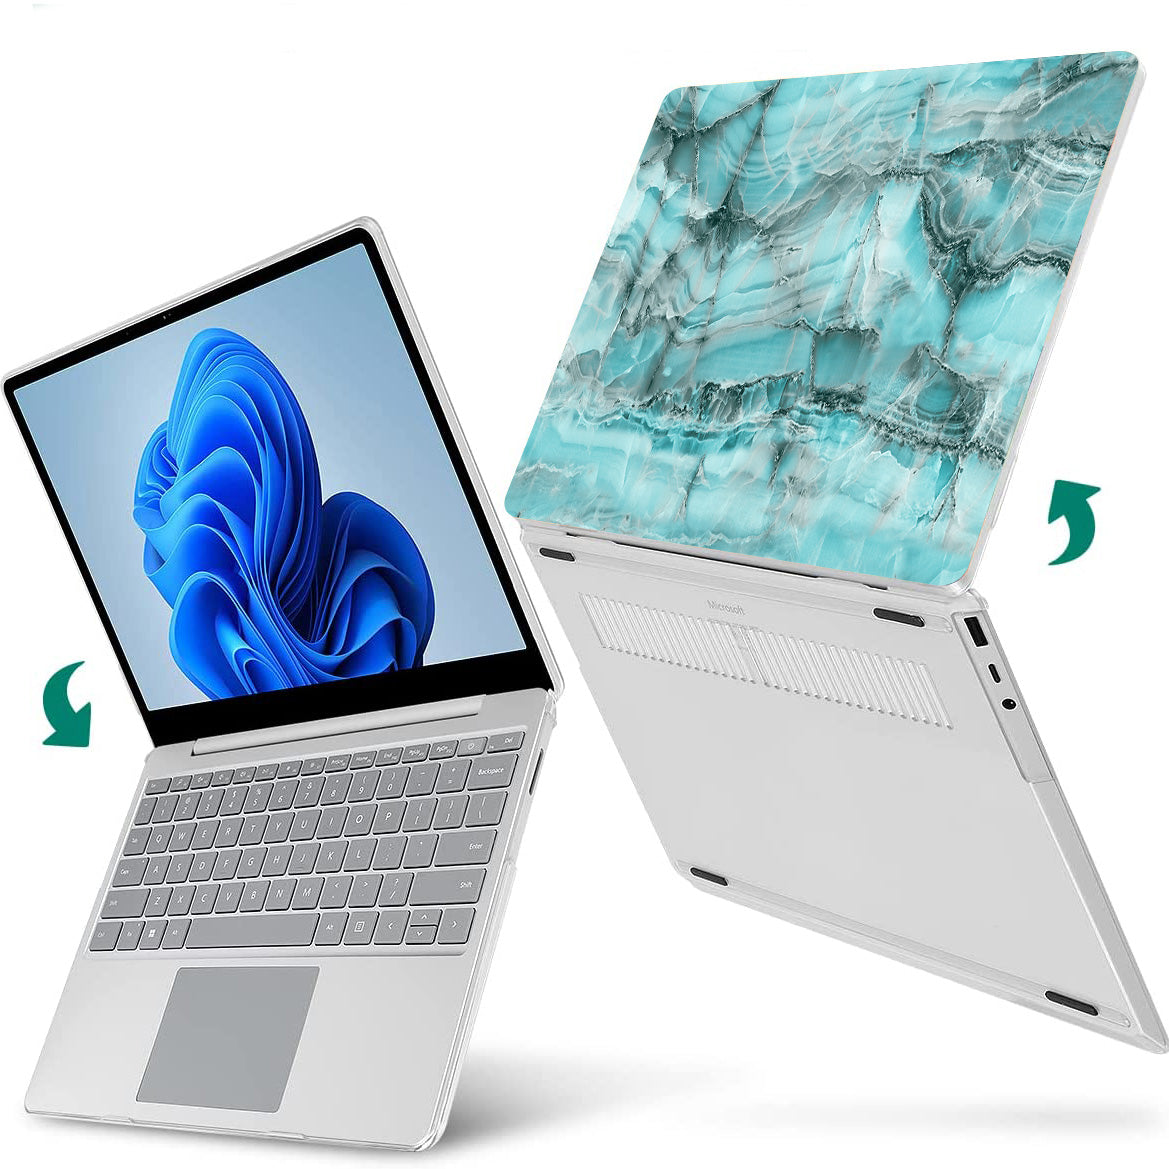 Qingqing Rock Microsoft Surface Laptop Case